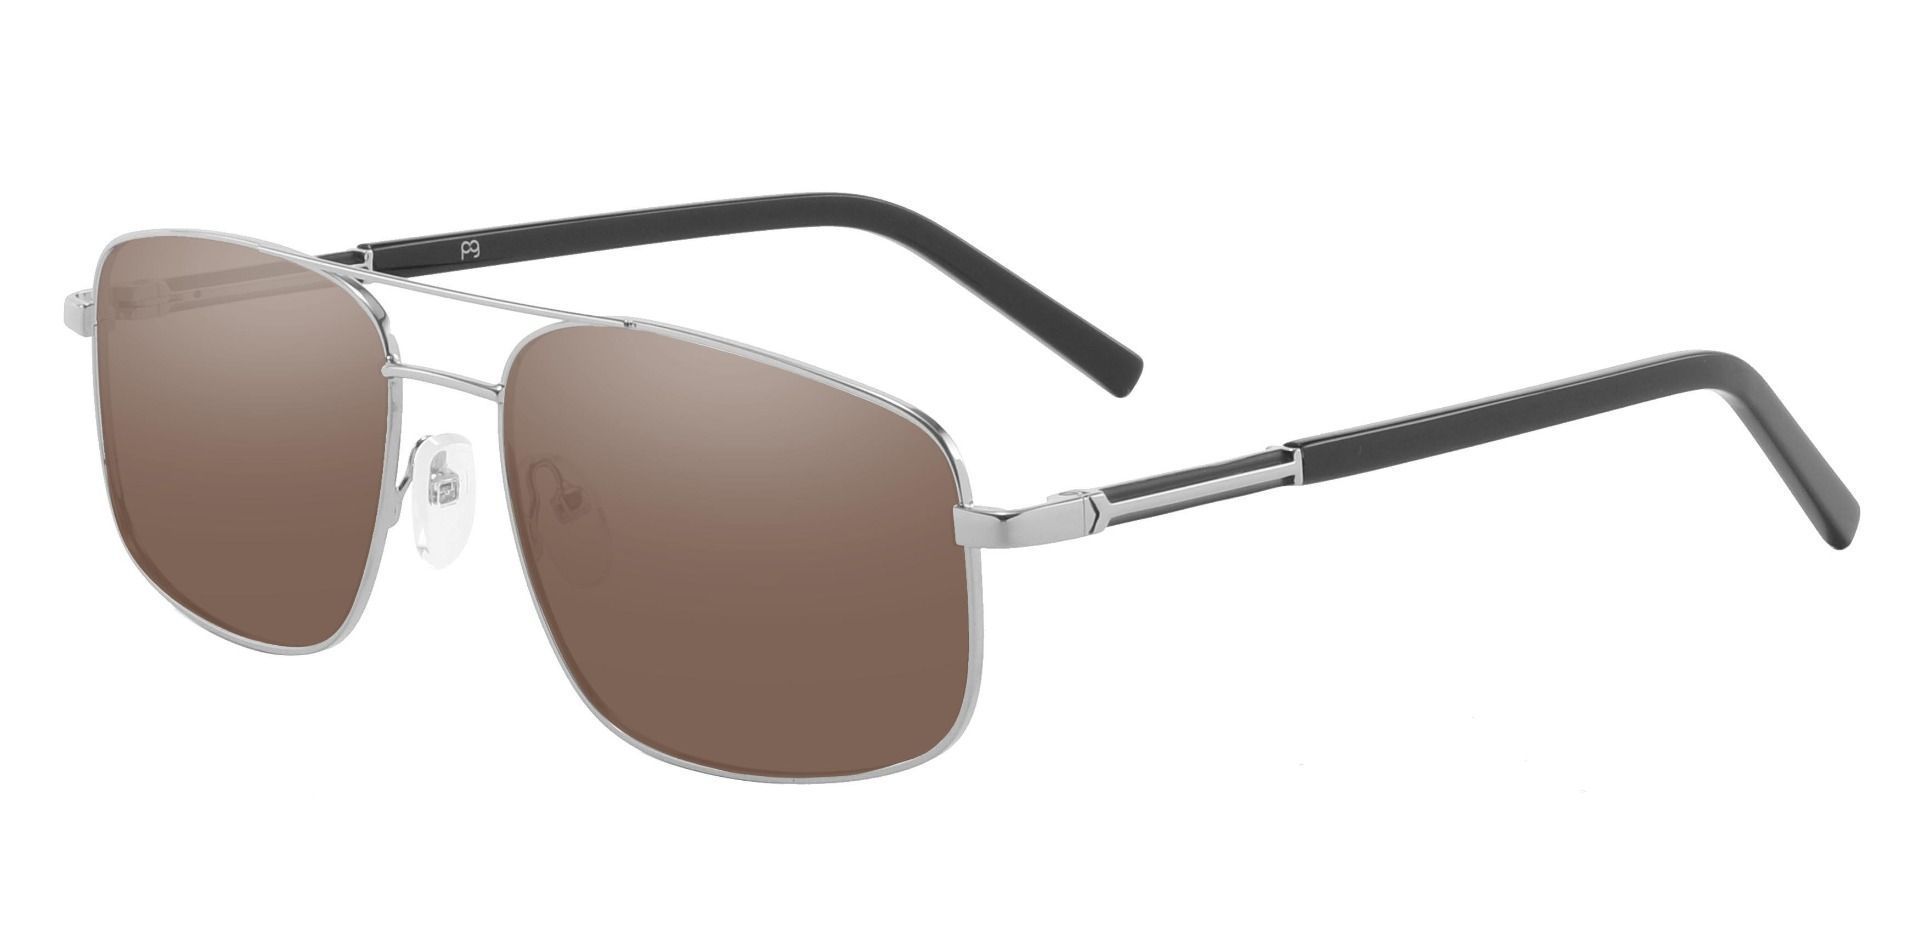 Davenport Aviator Reading Sunglasses - Silver Frame With Brown Lenses